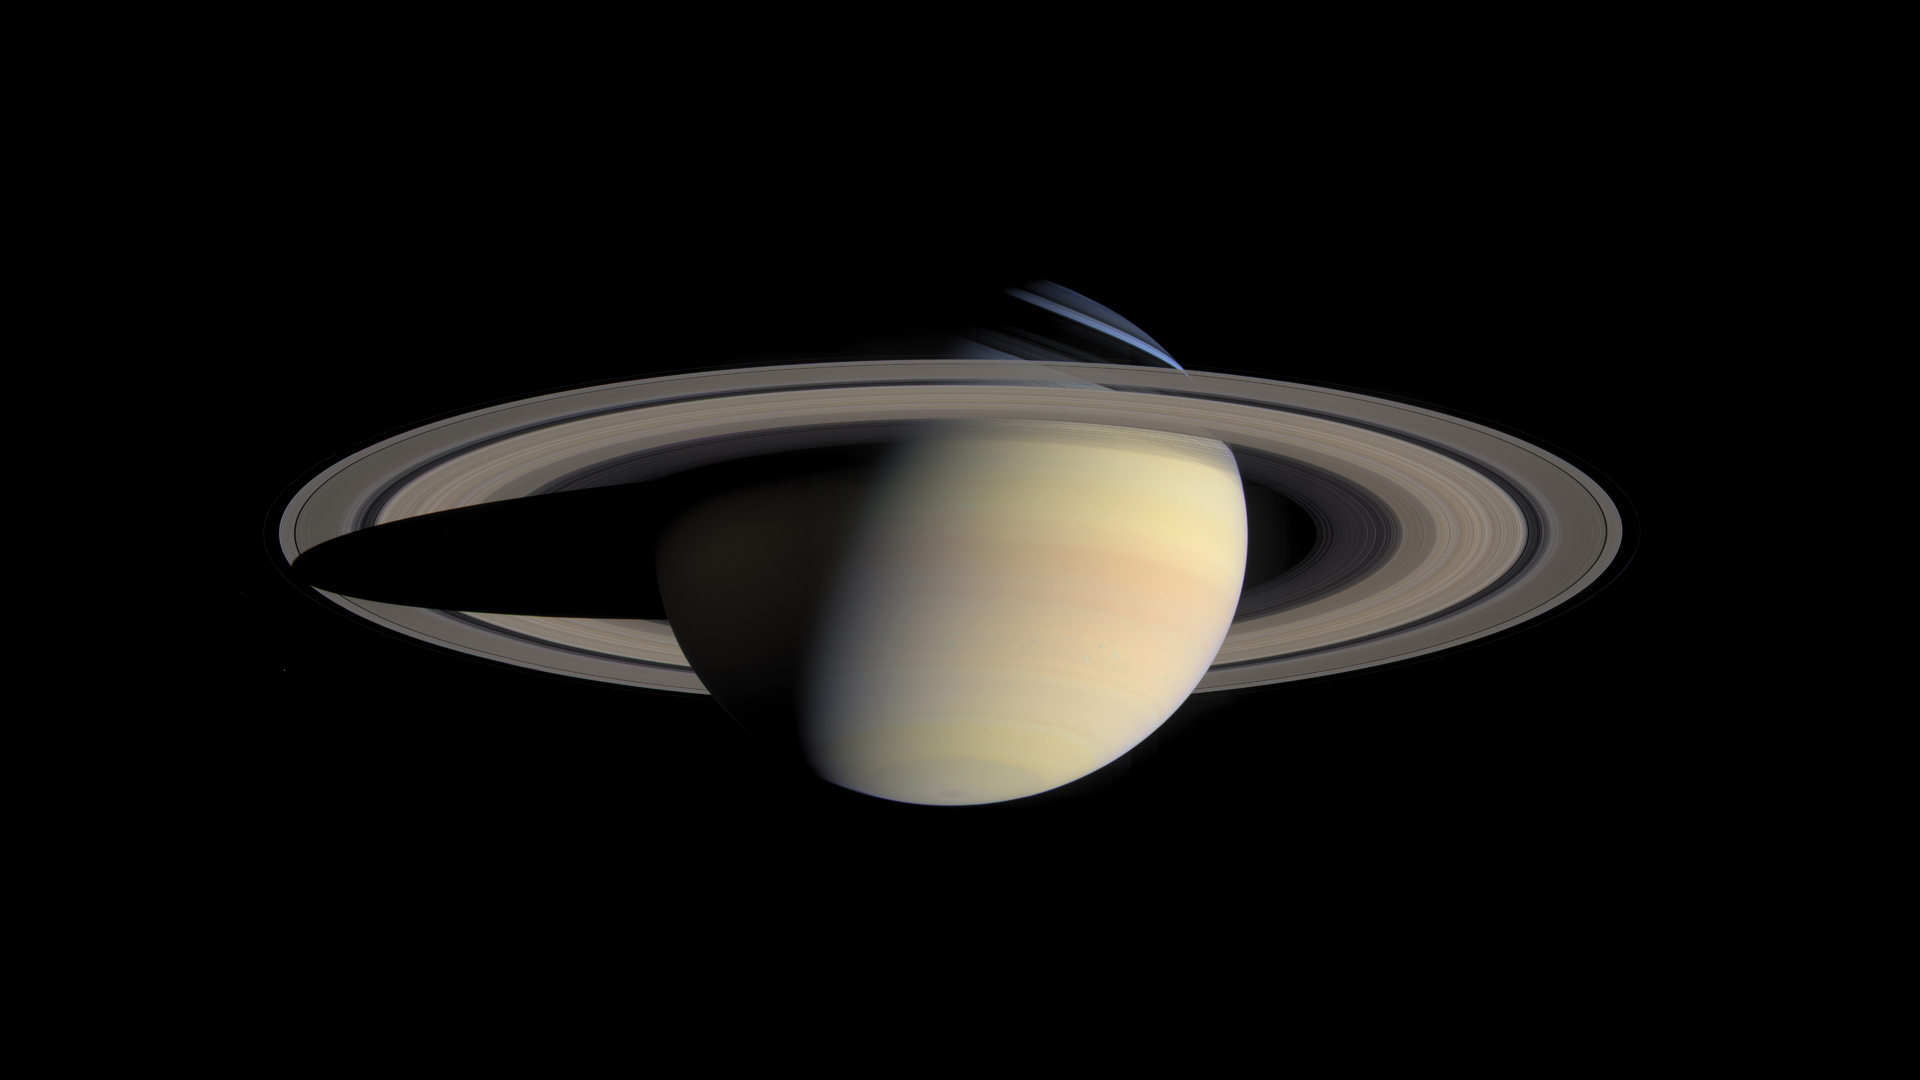 Saturn Planet HD WALLPAPER 